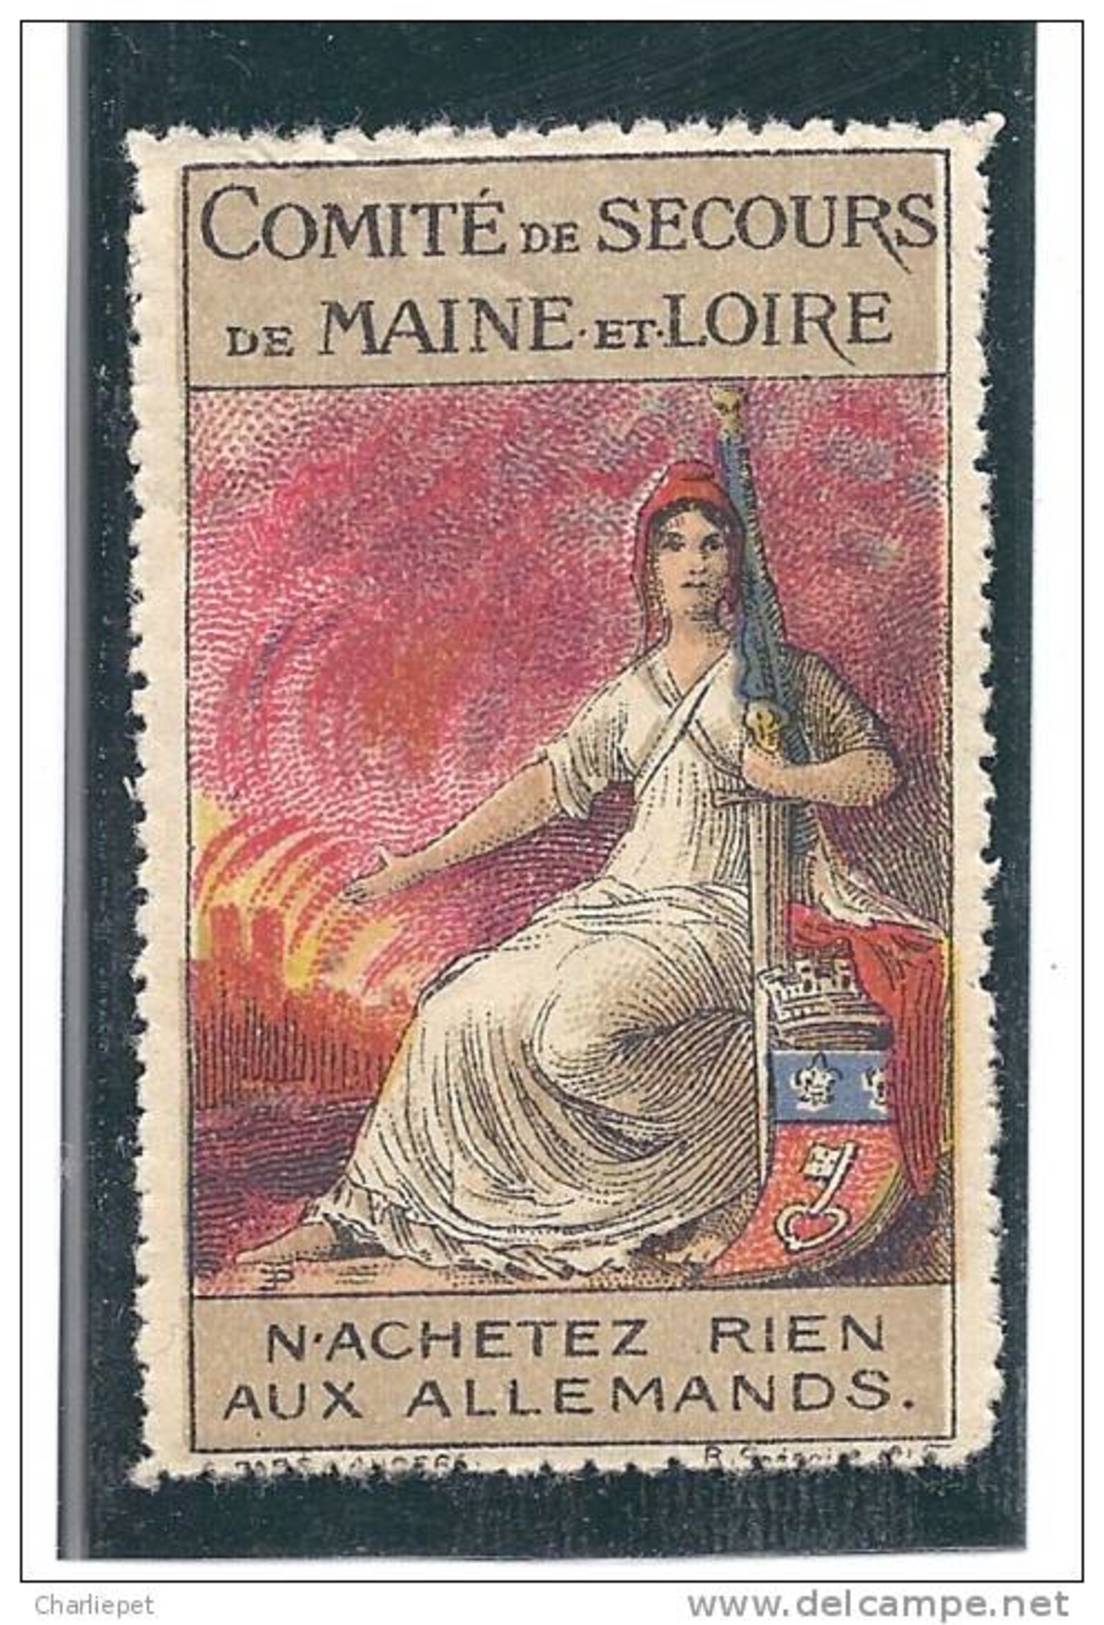 France WWI Marne & Loire Anti-German Propaganda Cinderella Stamp - Military Heritage